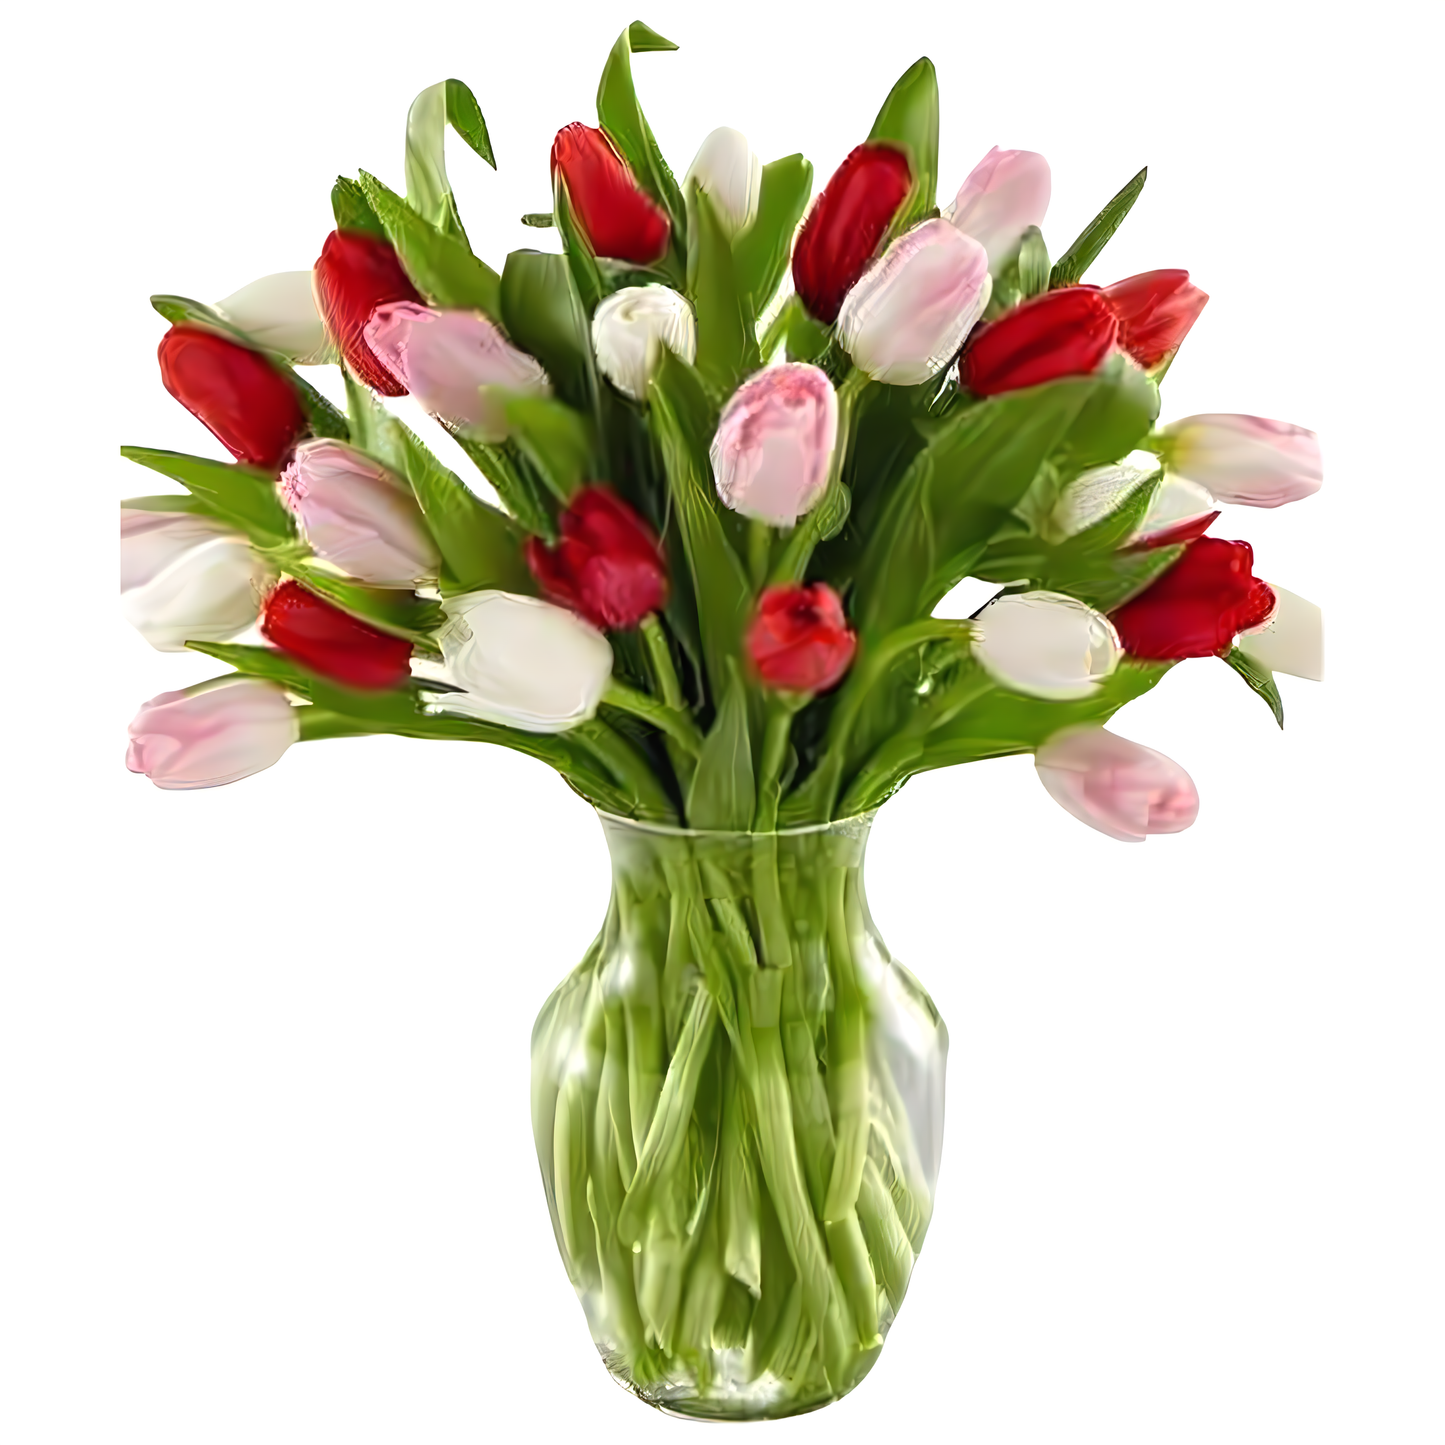 Tulips Of Love - Valentine's Day